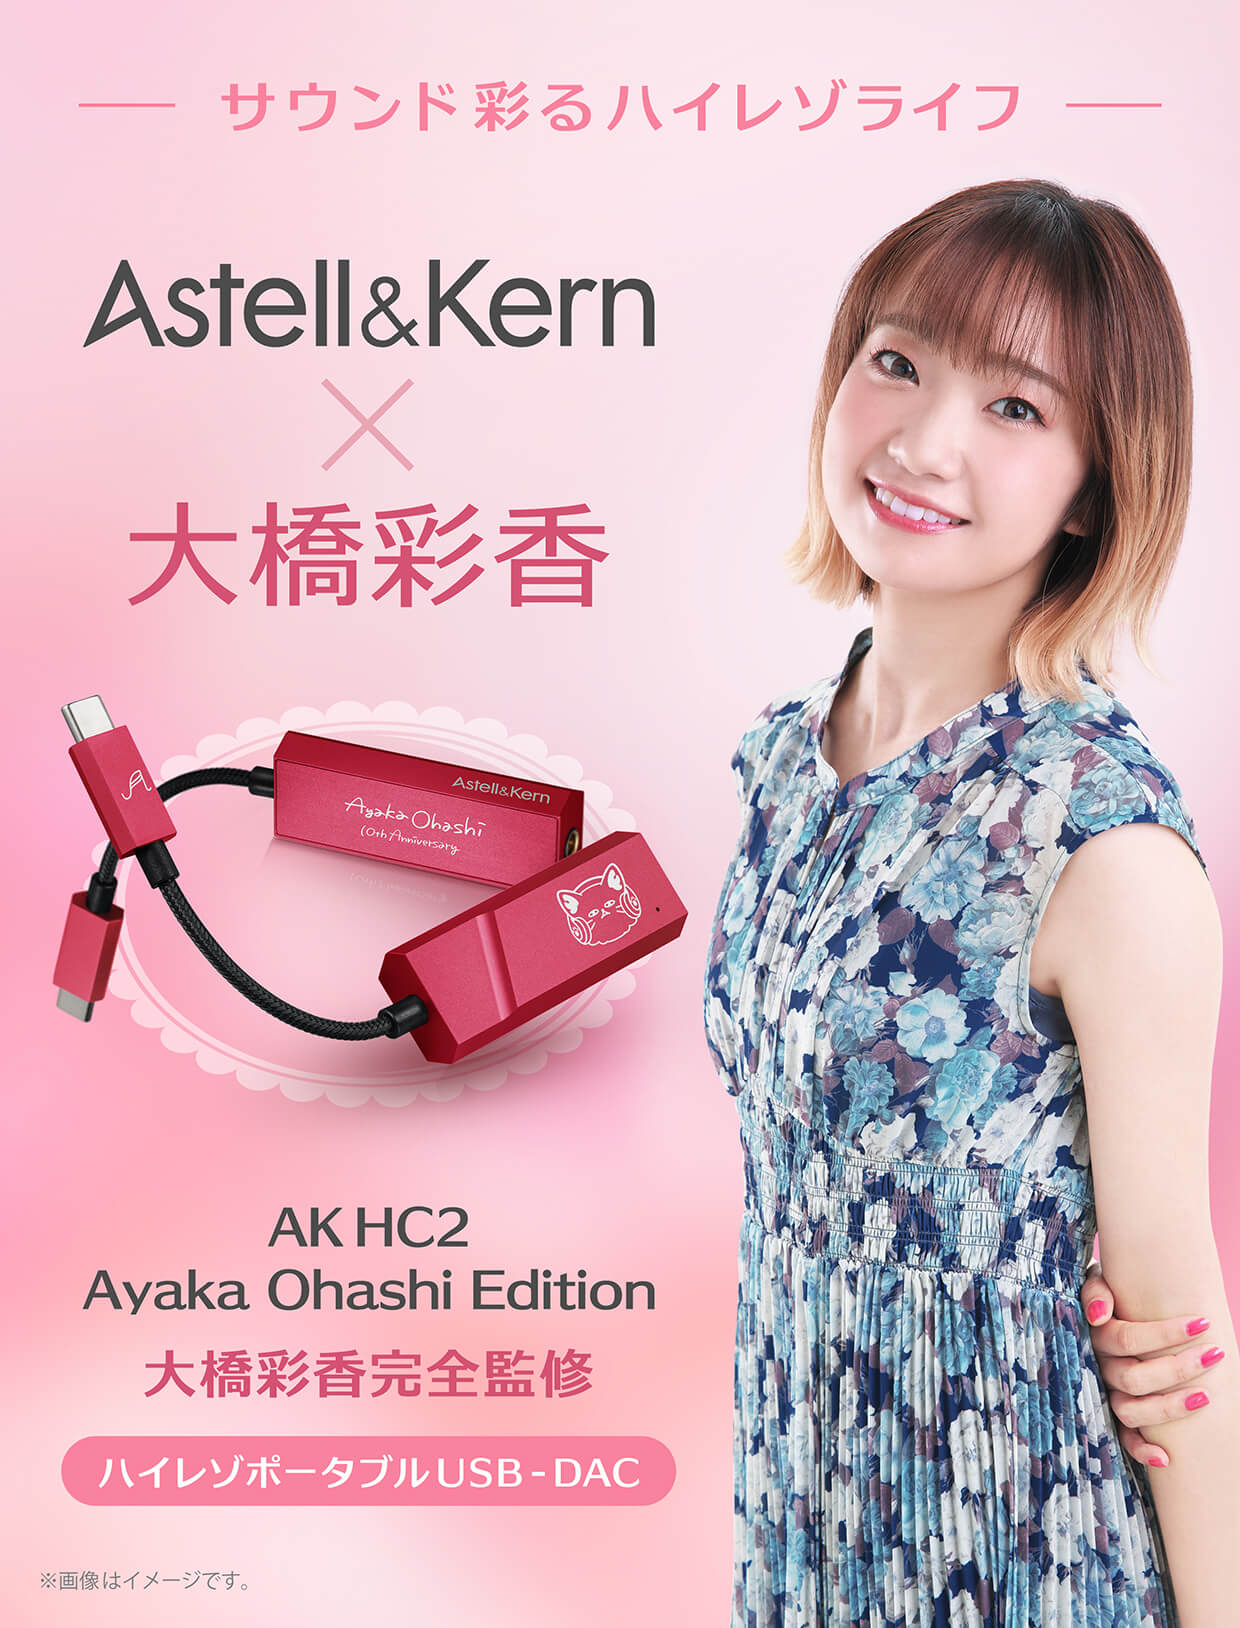 AK HC2 Ayaka Ohashi Edition